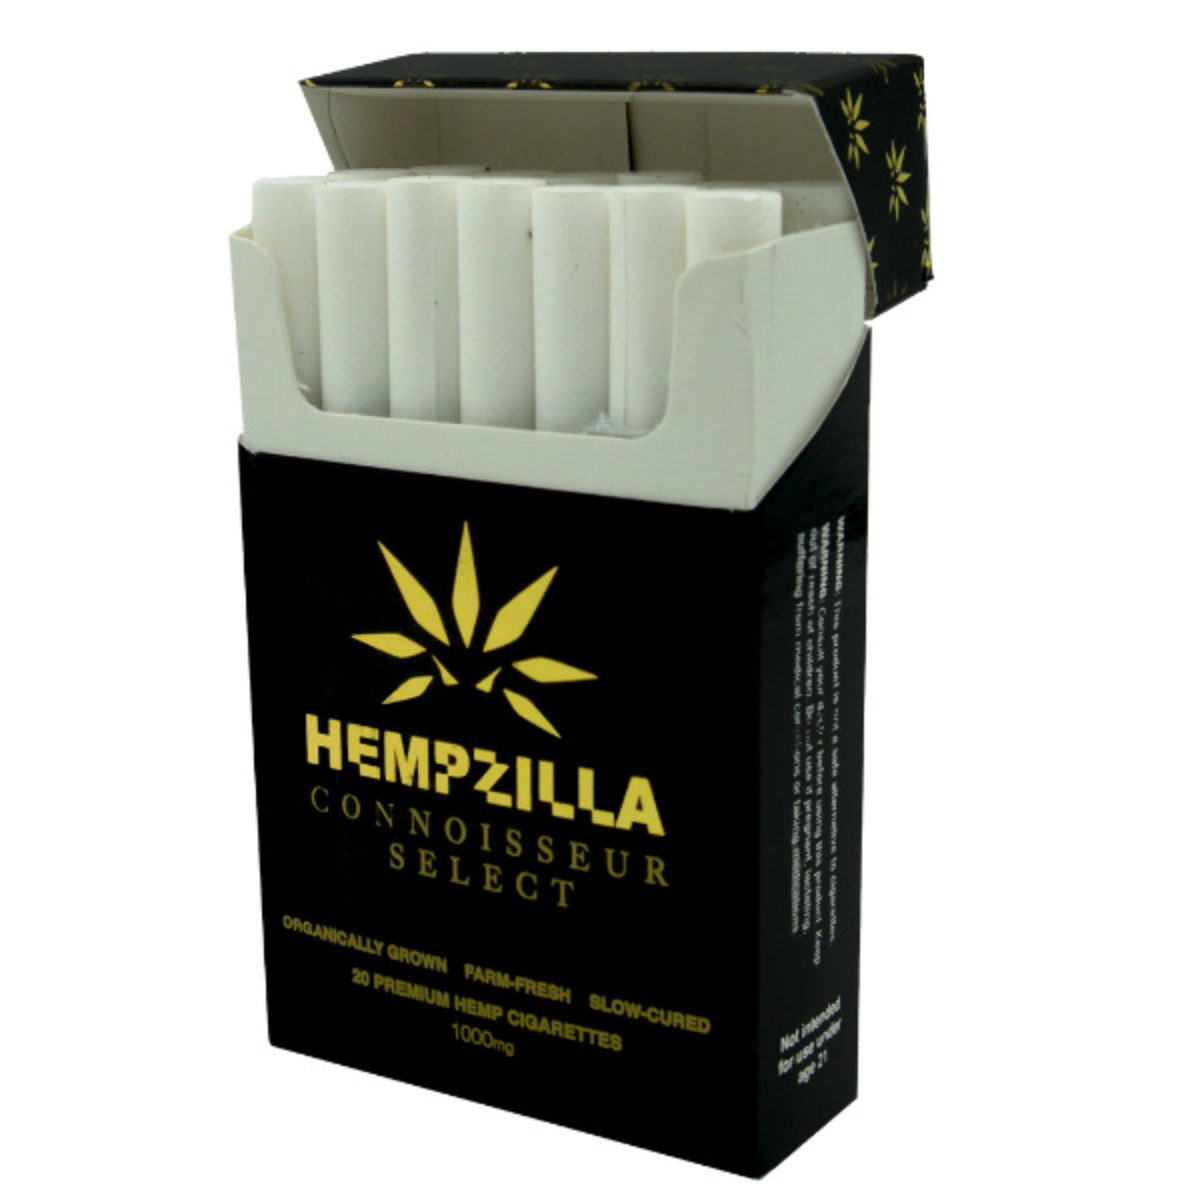 Hemp Cigarettes 20 per pack 1000mg CBD logo